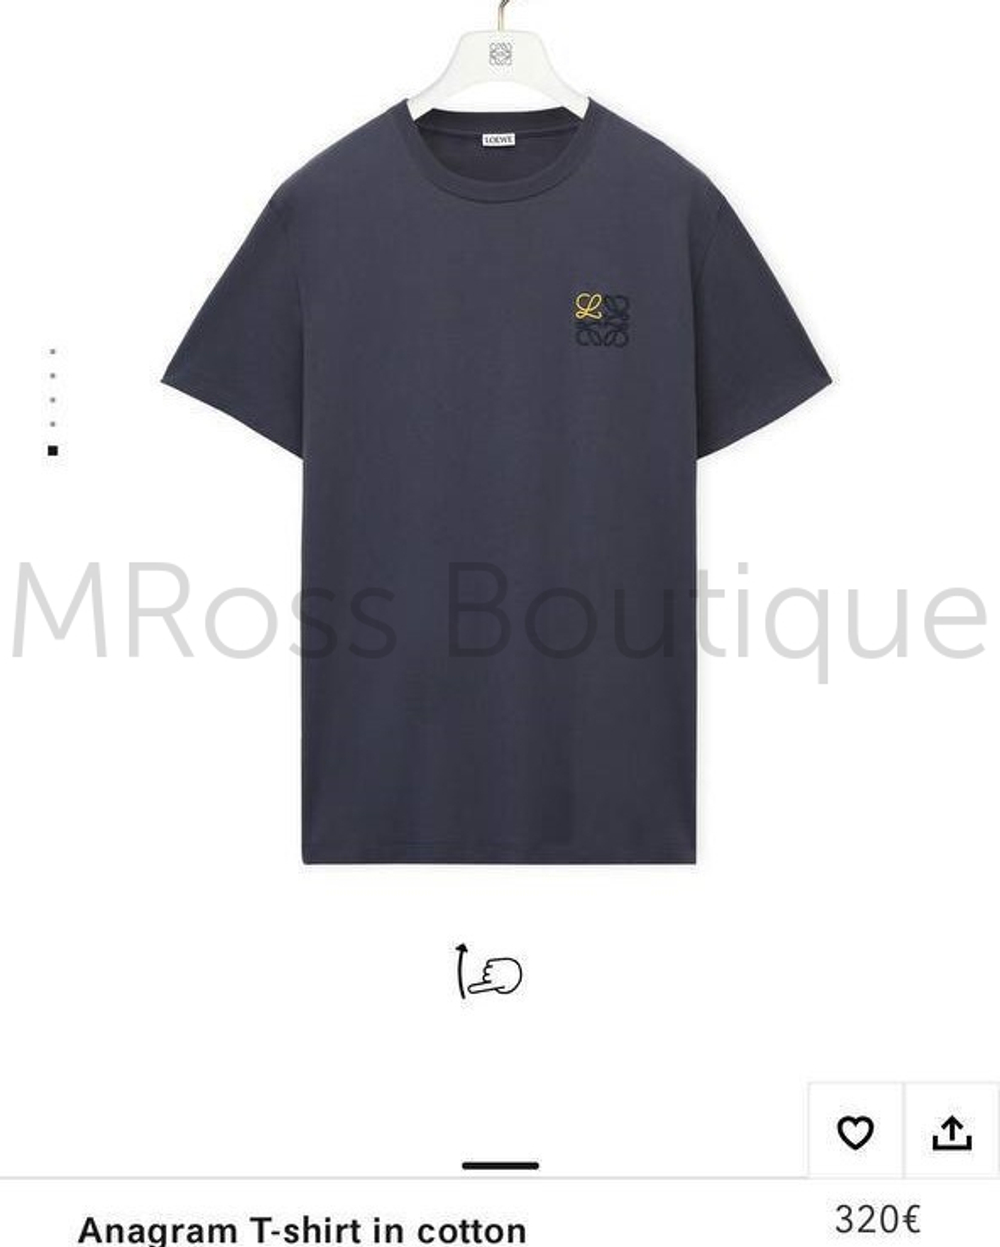 Базовая синяя футболка Loewe премиум класса